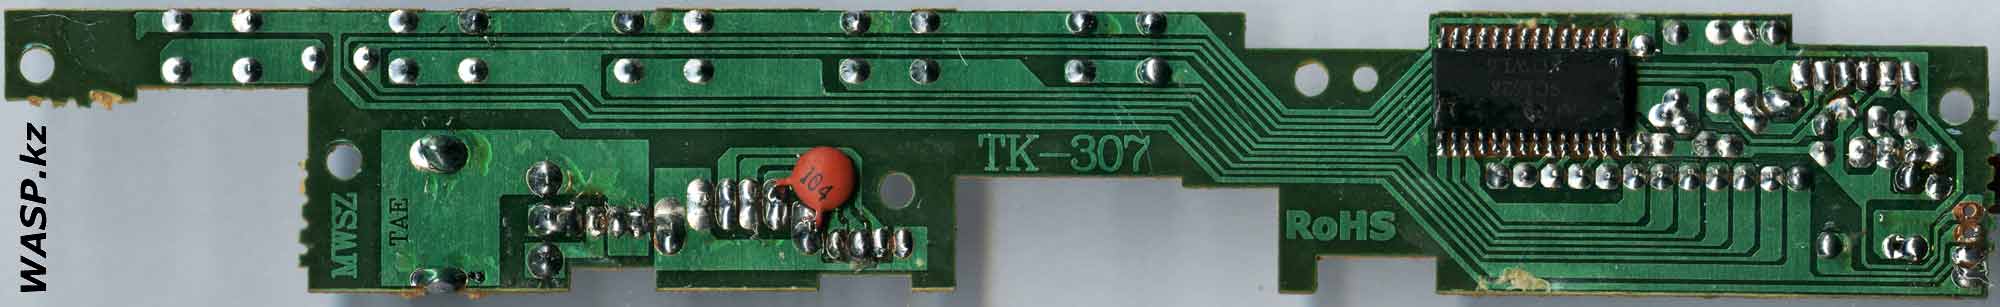 SC1628 на плате управления AVA DVD-TK307